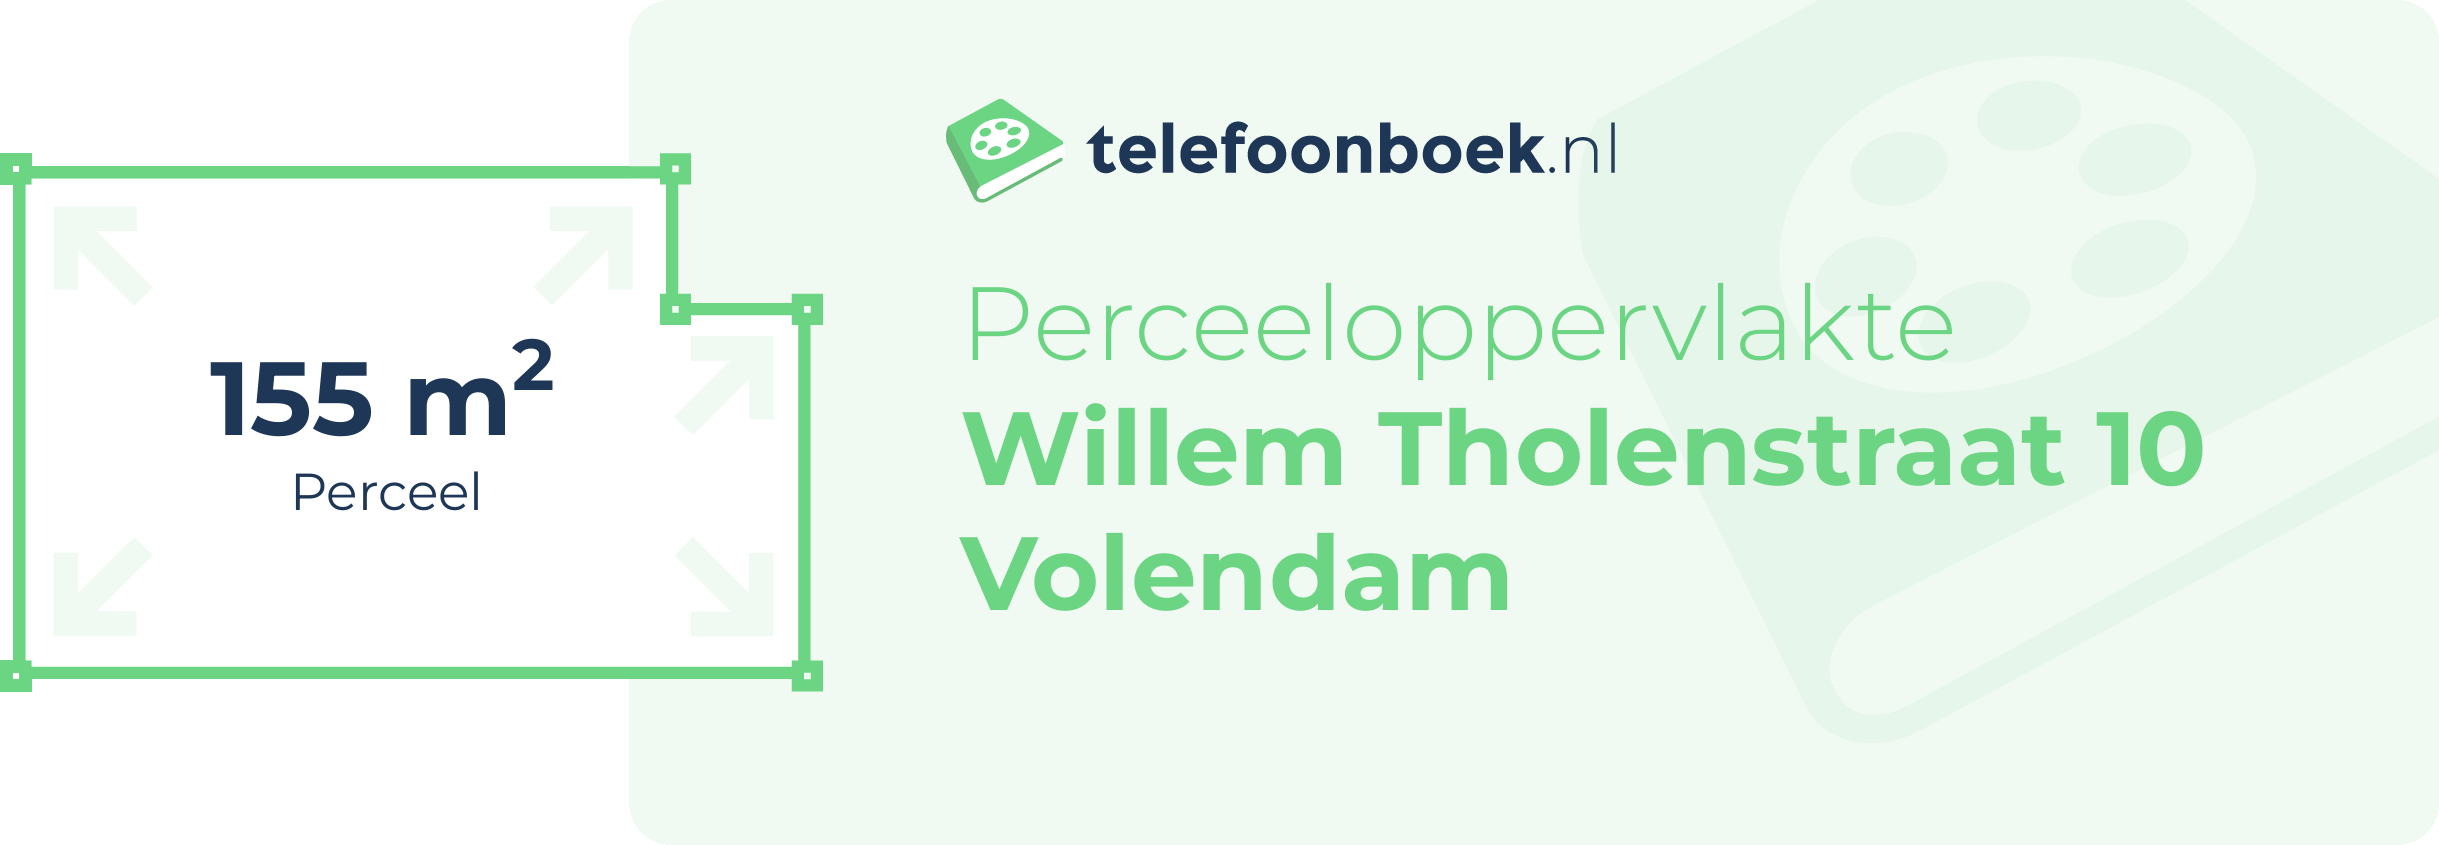 Perceeloppervlakte Willem Tholenstraat 10 Volendam